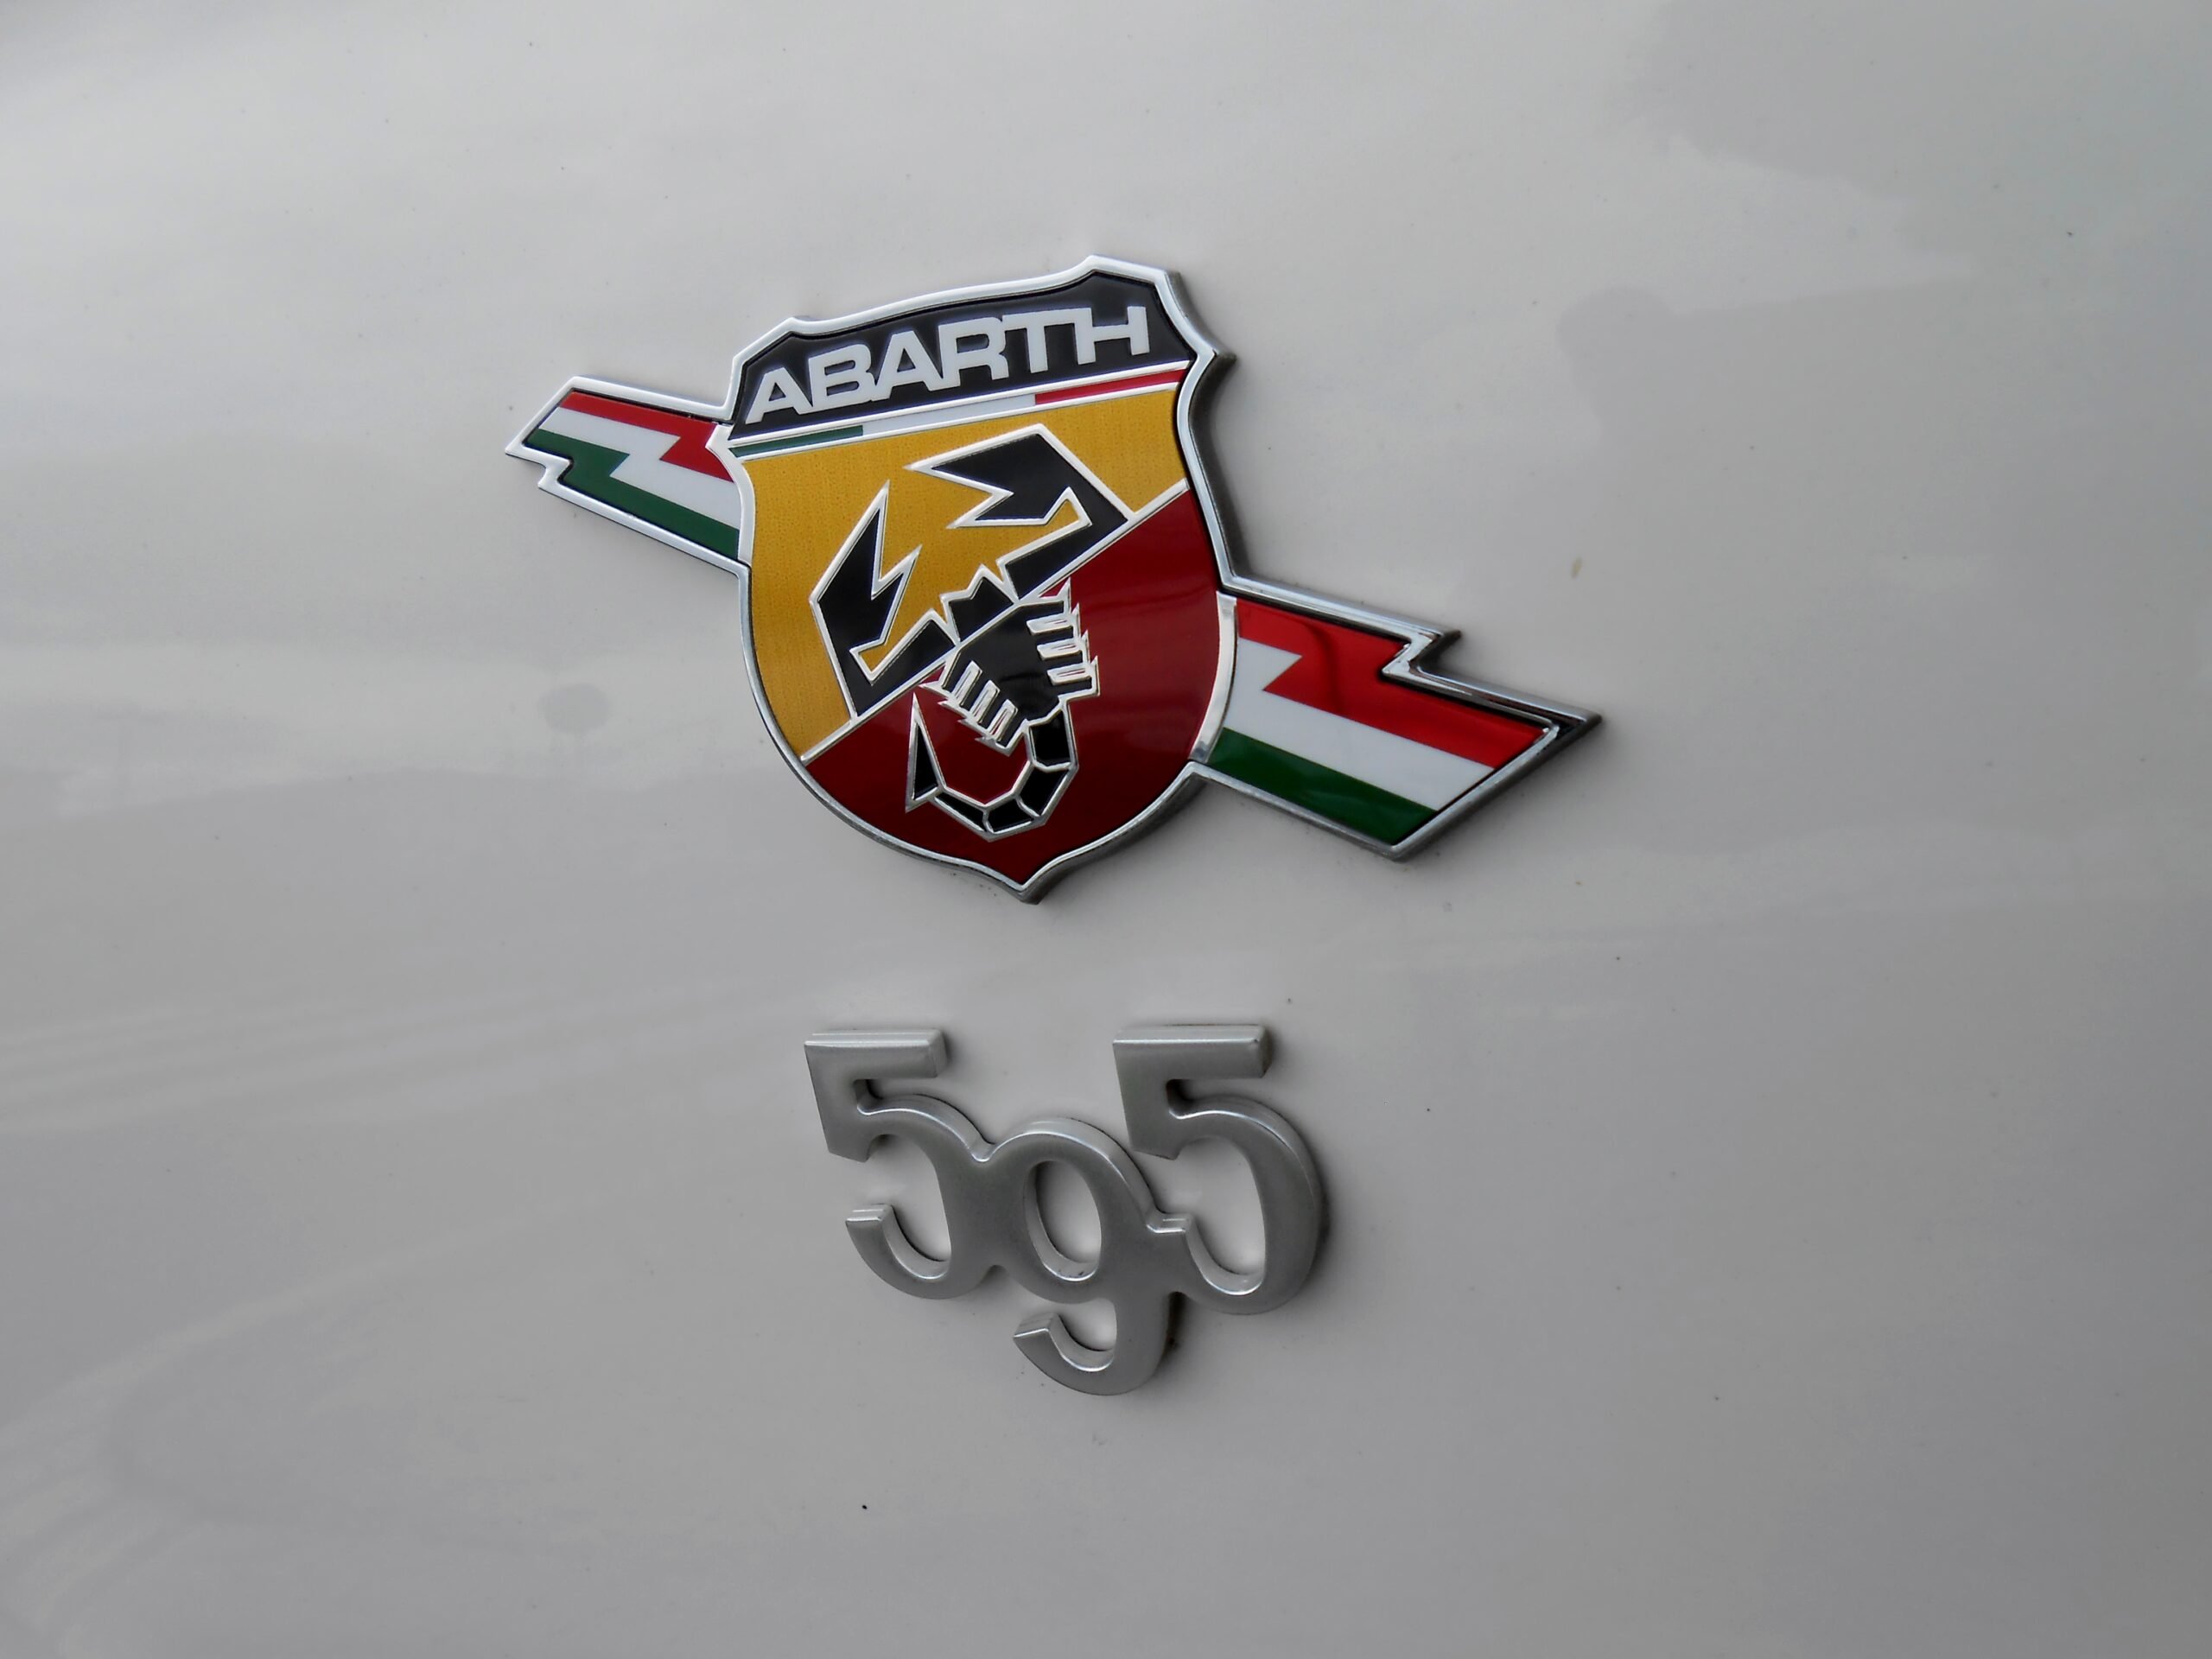 Abarth 595 logo by Handelsgeselschaft